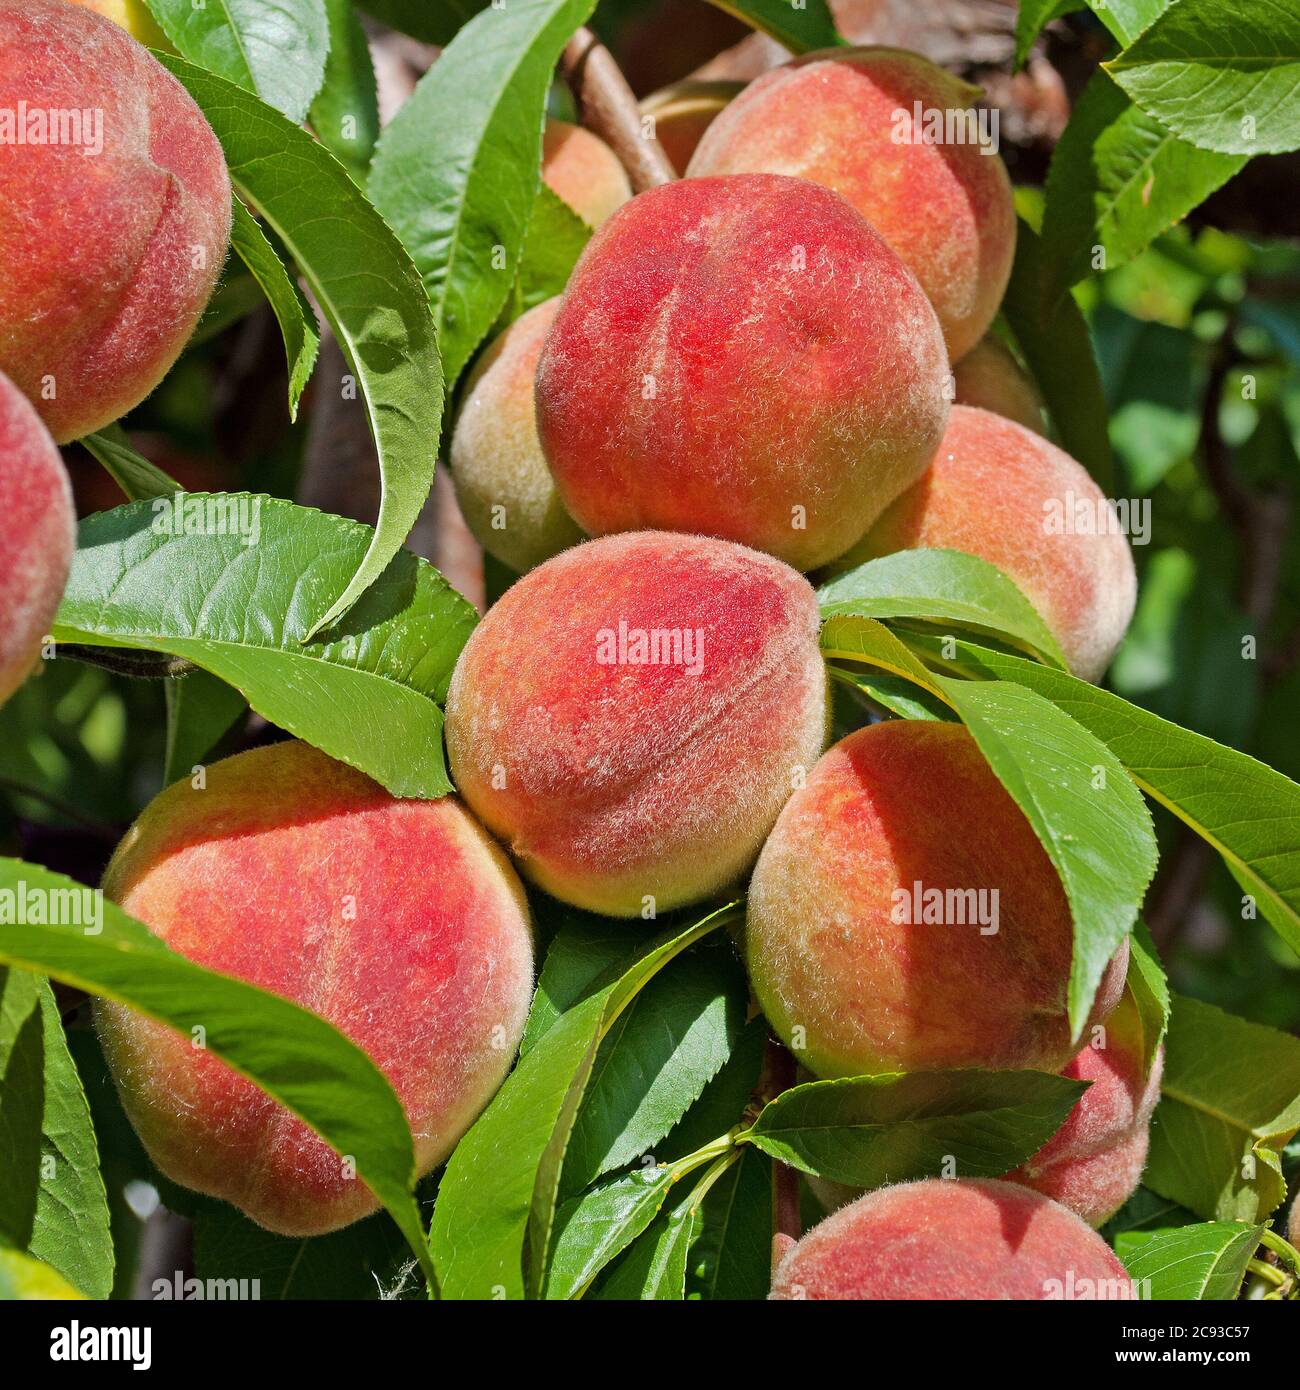 Ripe peaches, prunus persica, on the tree Stock Photo